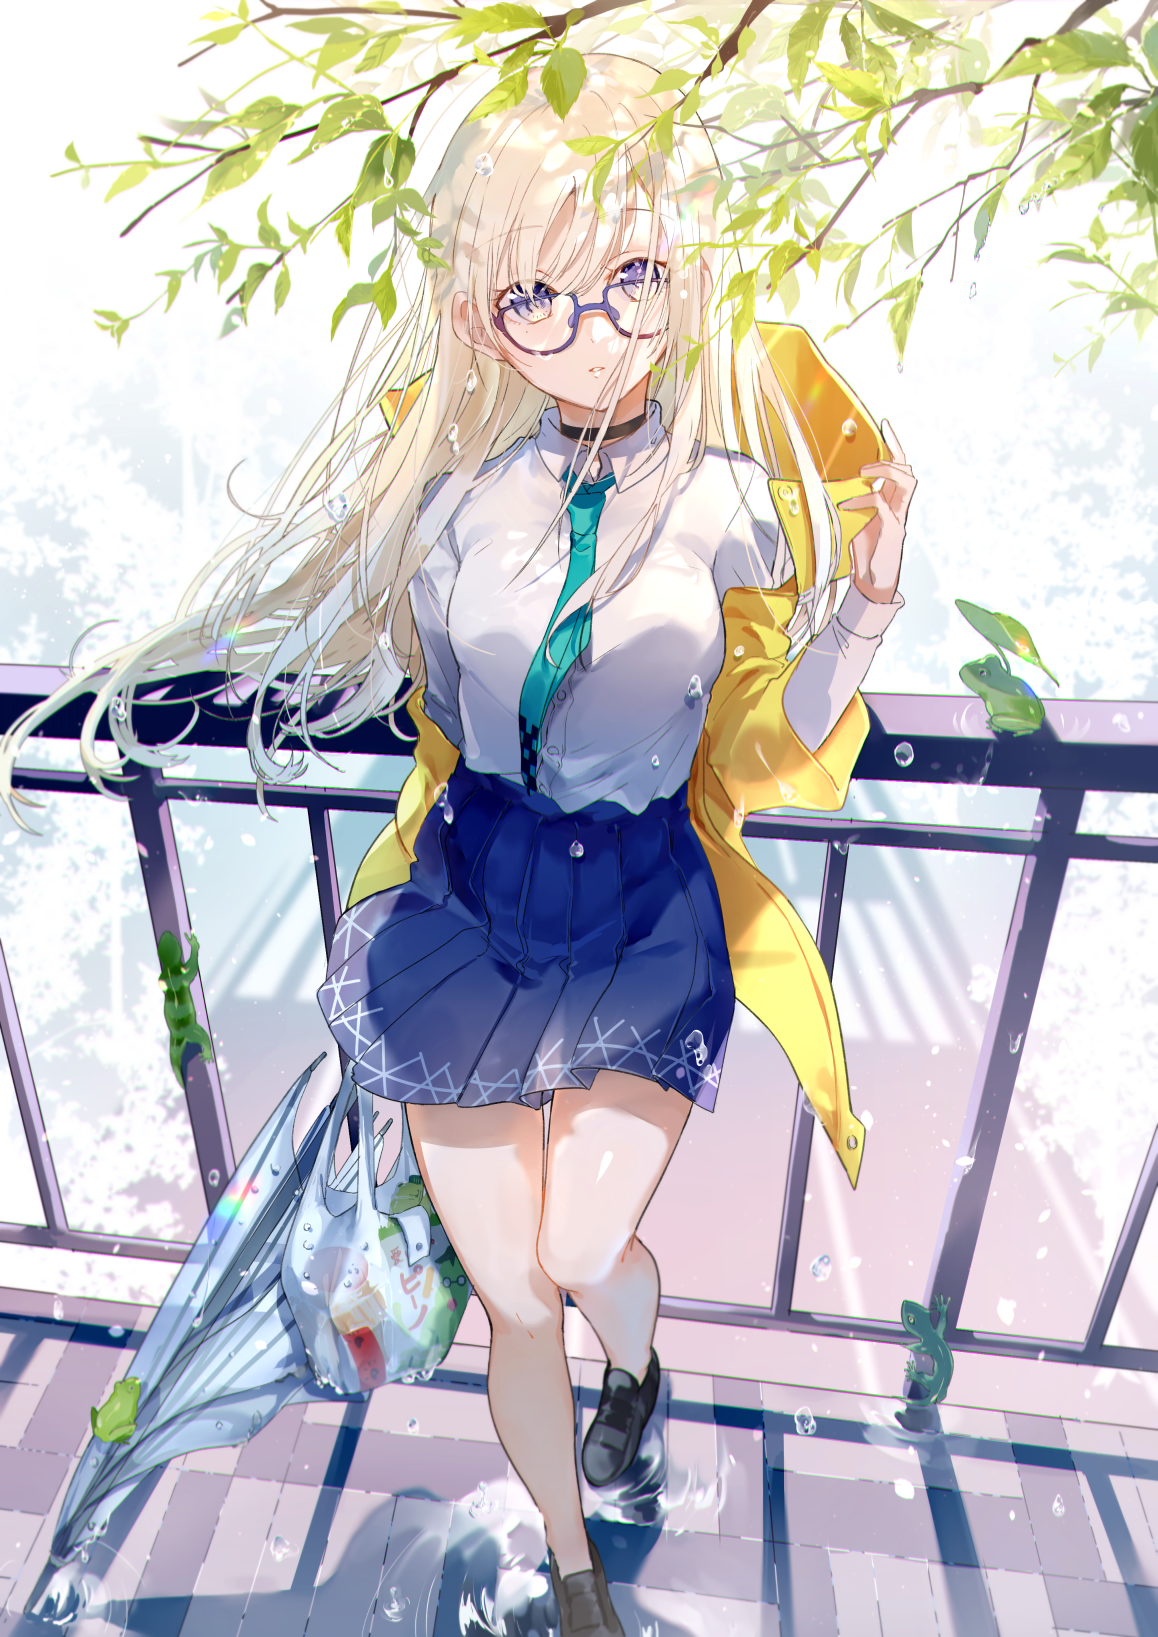 Anime 1158x1637 anime anime girls digital art artwork 2D portrait display miwano ragu blonde glasses school uniform raincoat umbrella